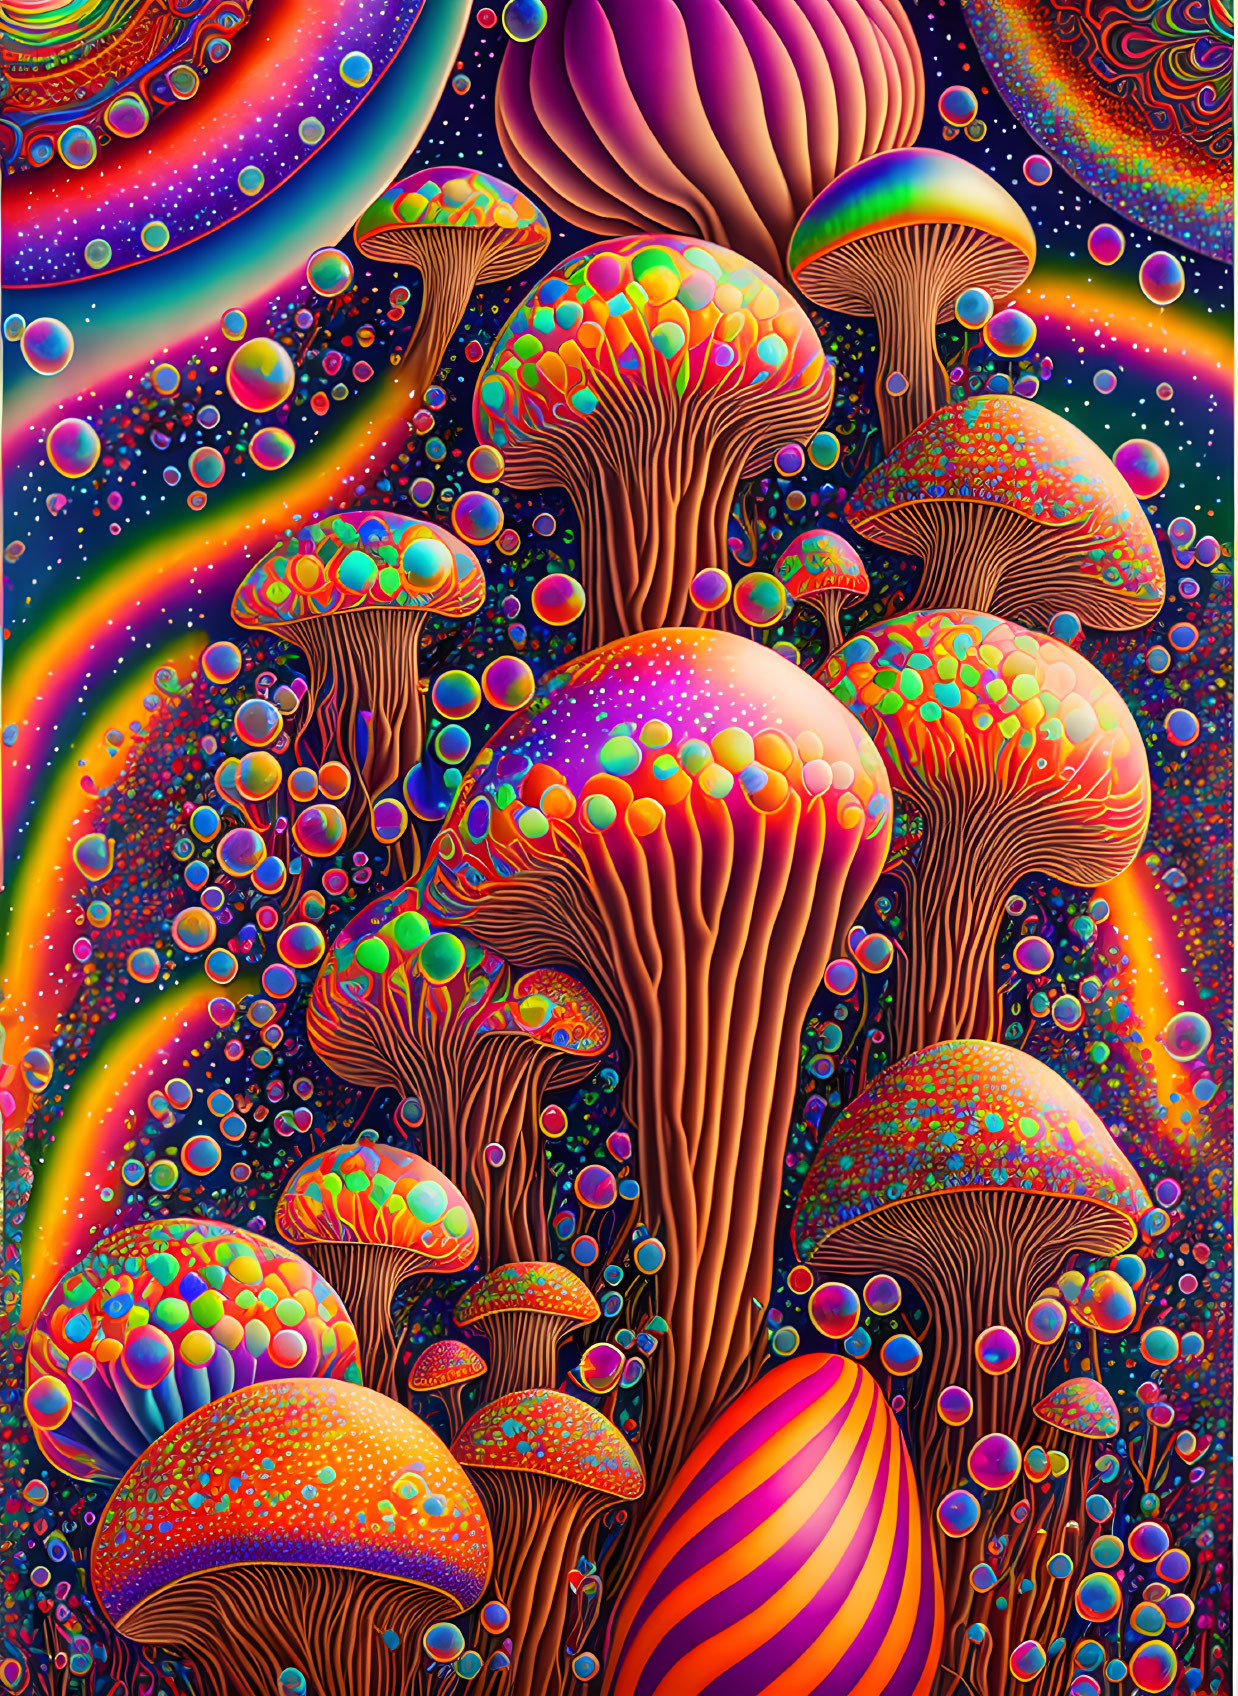 Mushrooms with many glass bulbs 